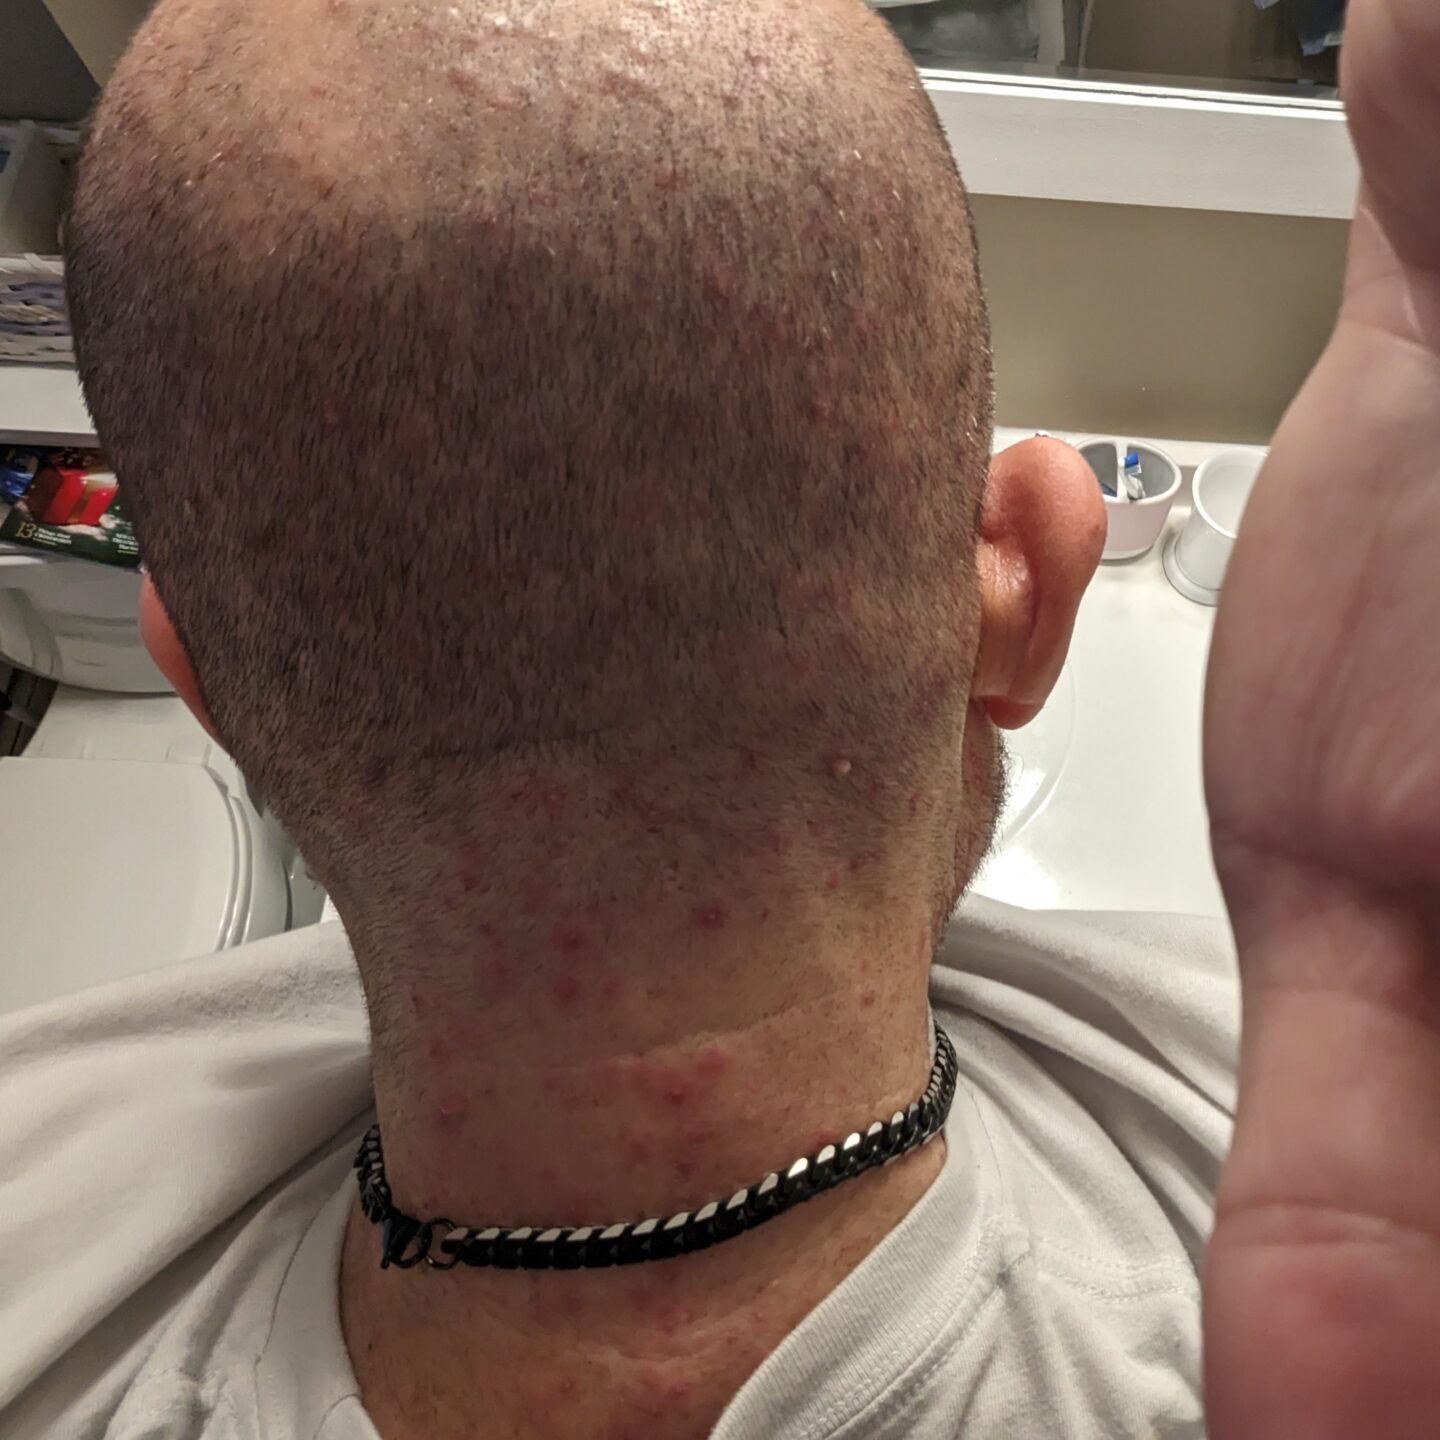 Jason had a skin outbreak following cancer treatment